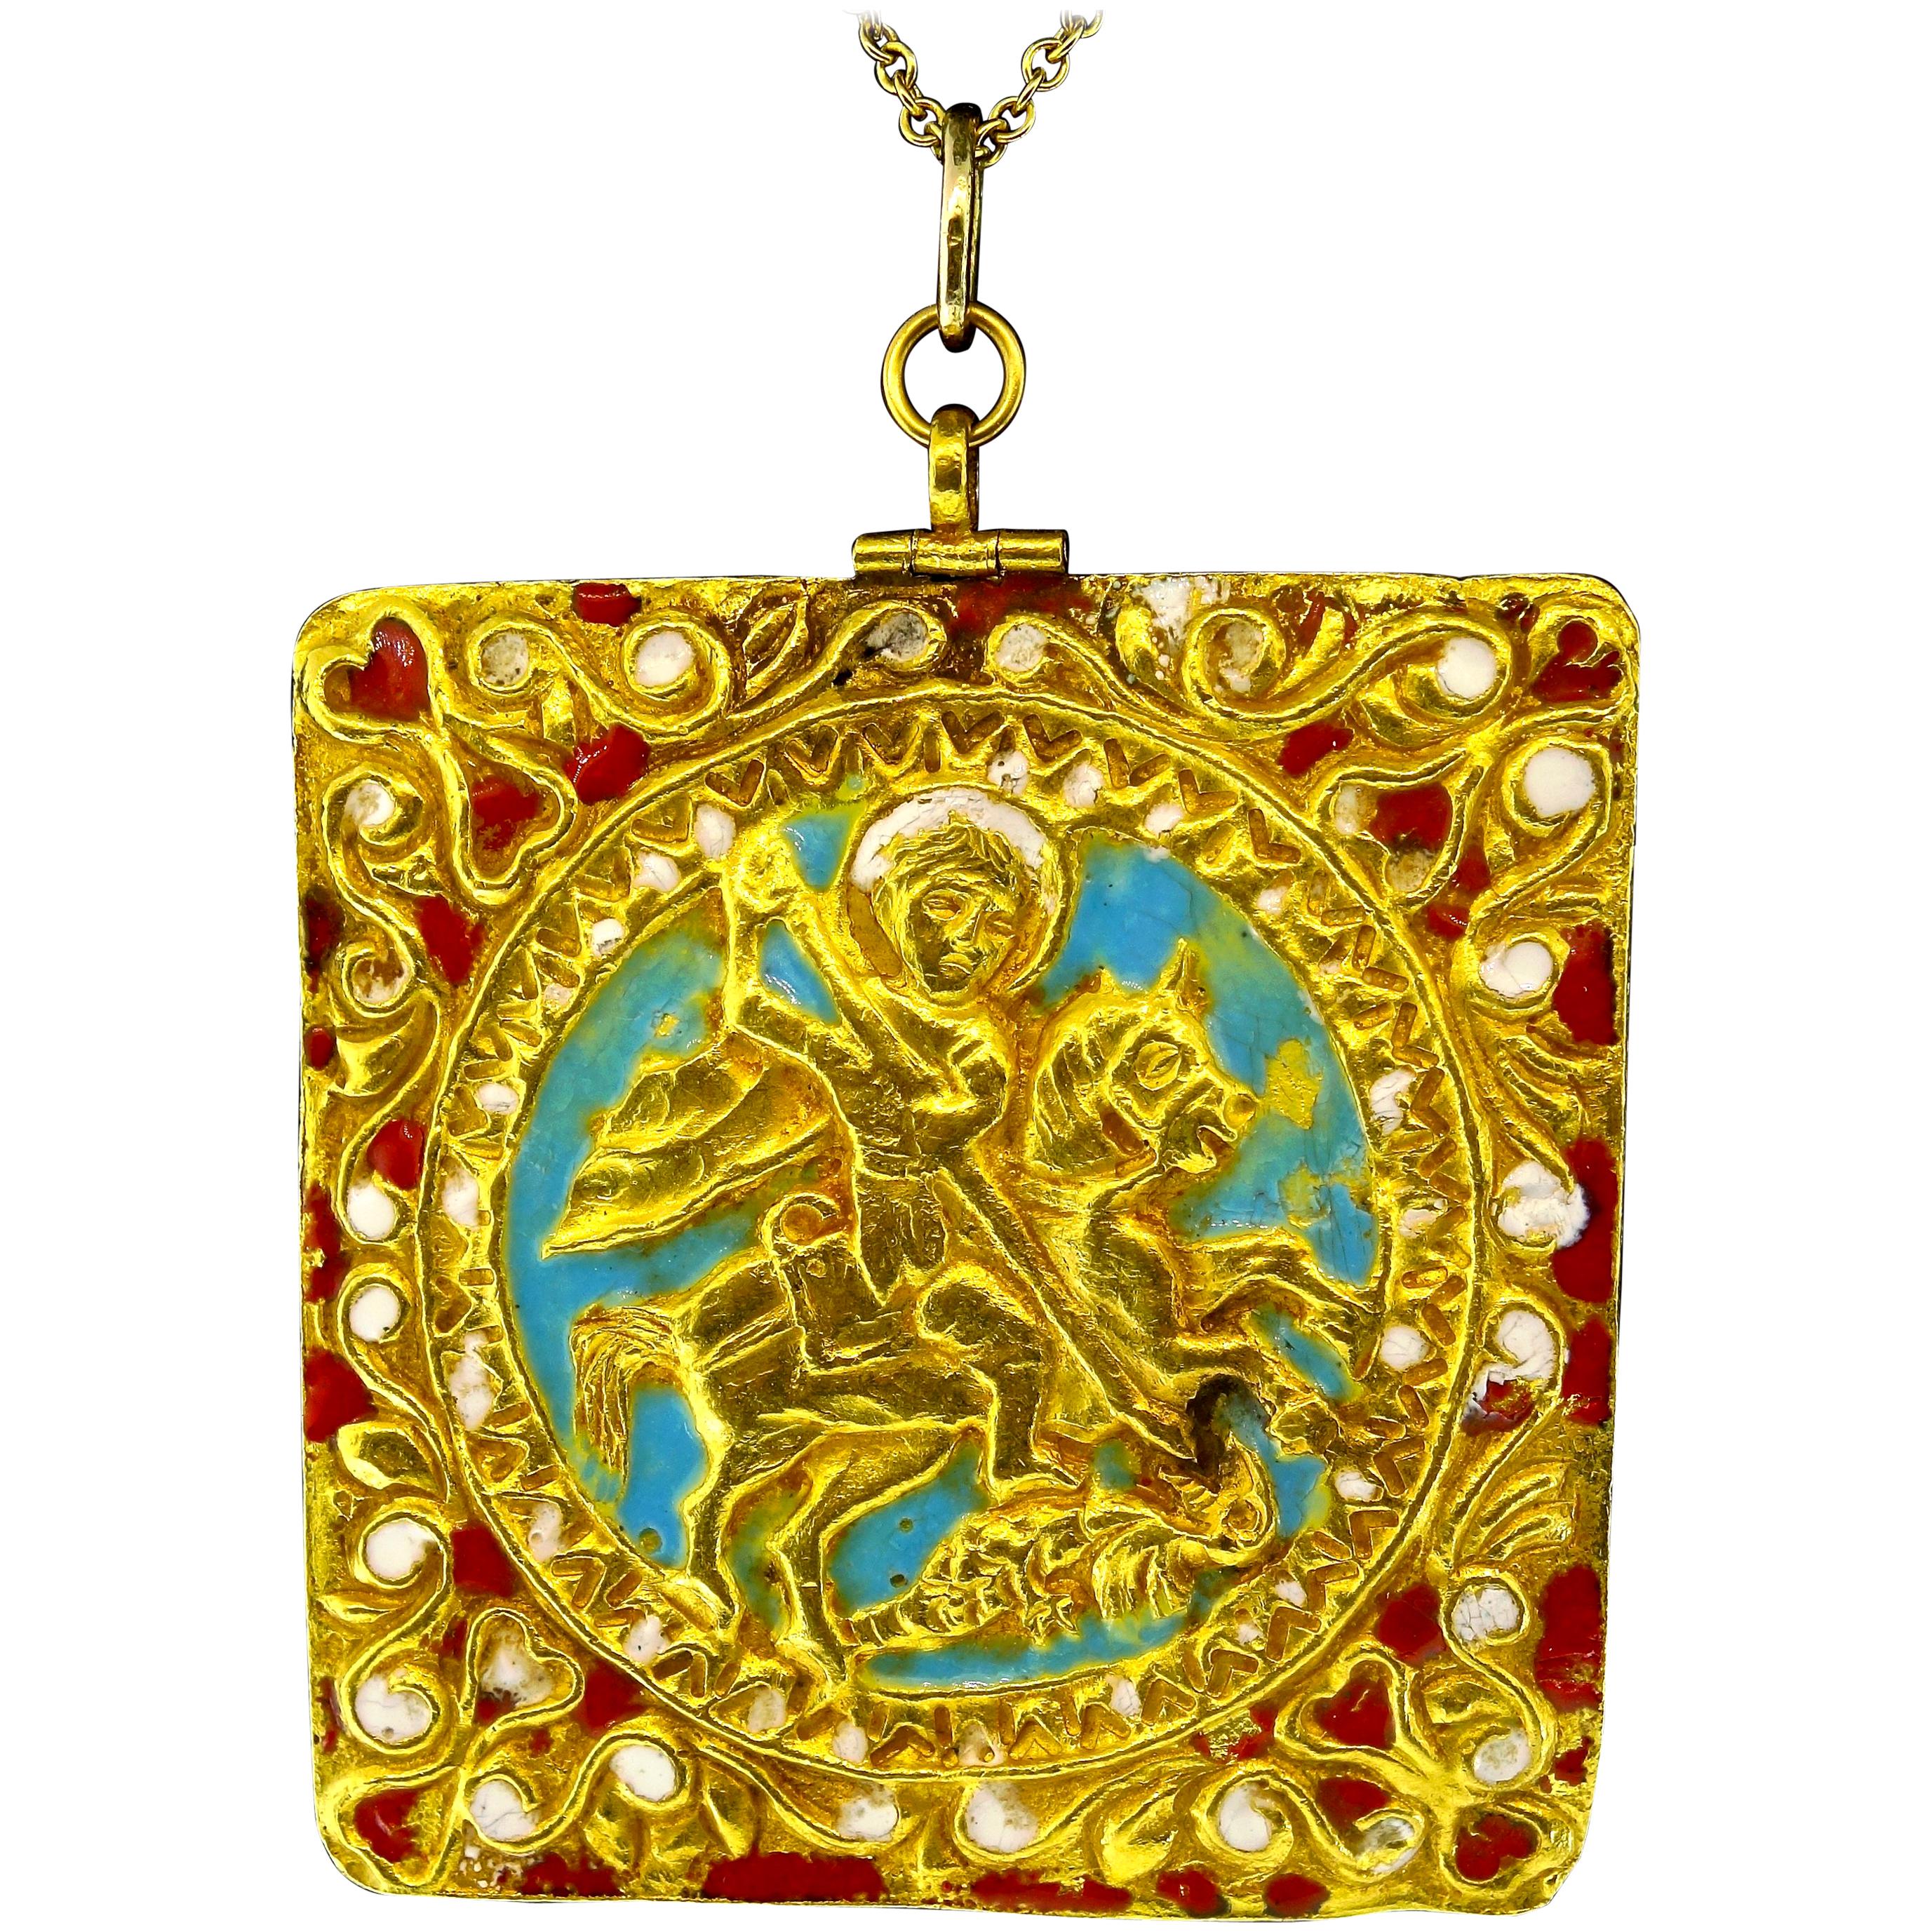 Late 18th-Early 19th Century 18 Karat Gold Enamel Pendant, circa 1790-1800